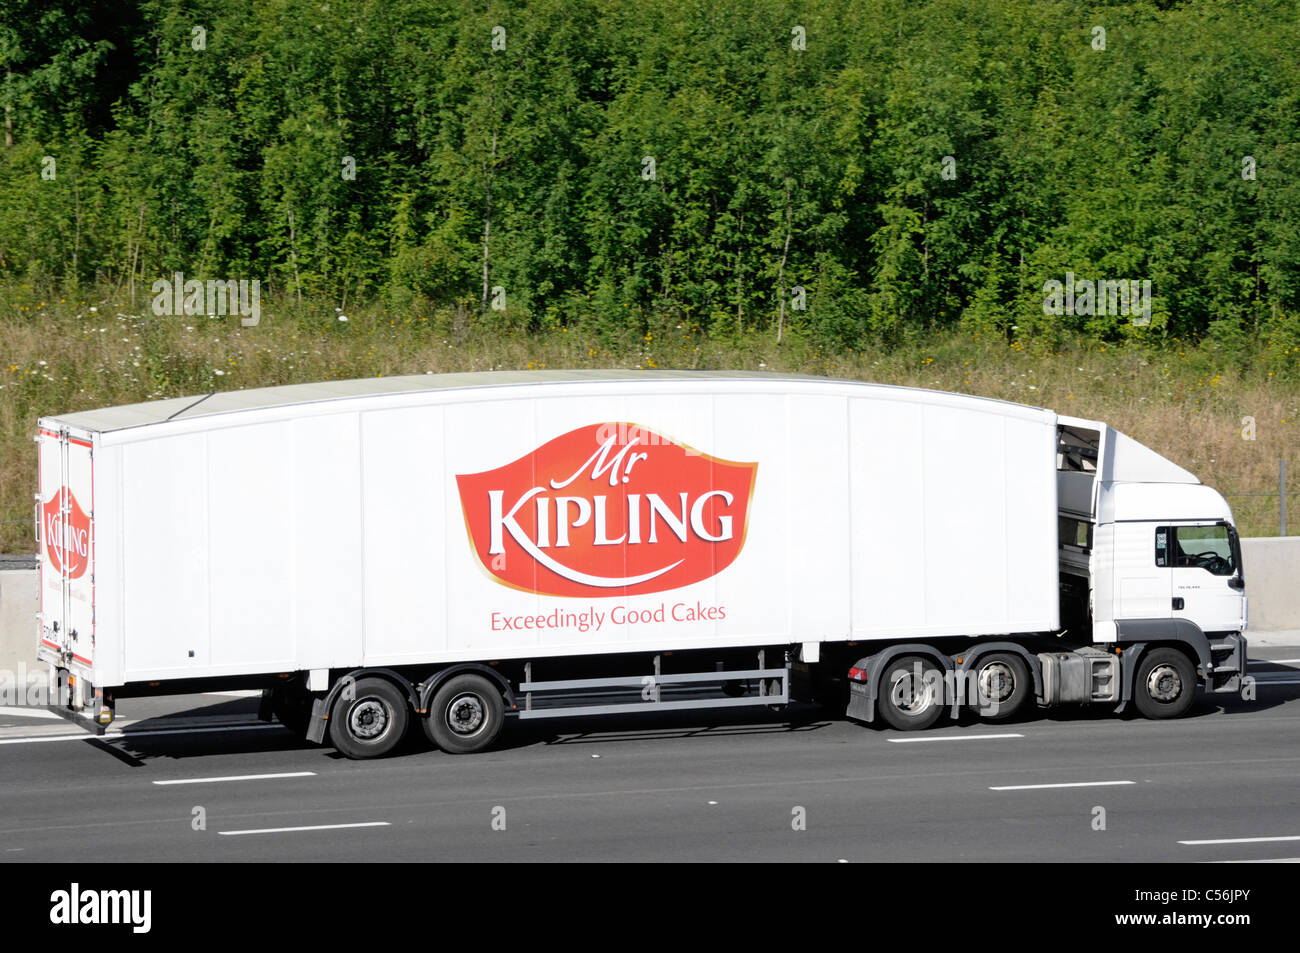 Premier Foods Mr Kipling Cake manufacturing business logo food supply chain distribution hgv lorry truck & trailer transport driving along UK motorway Stock Photo